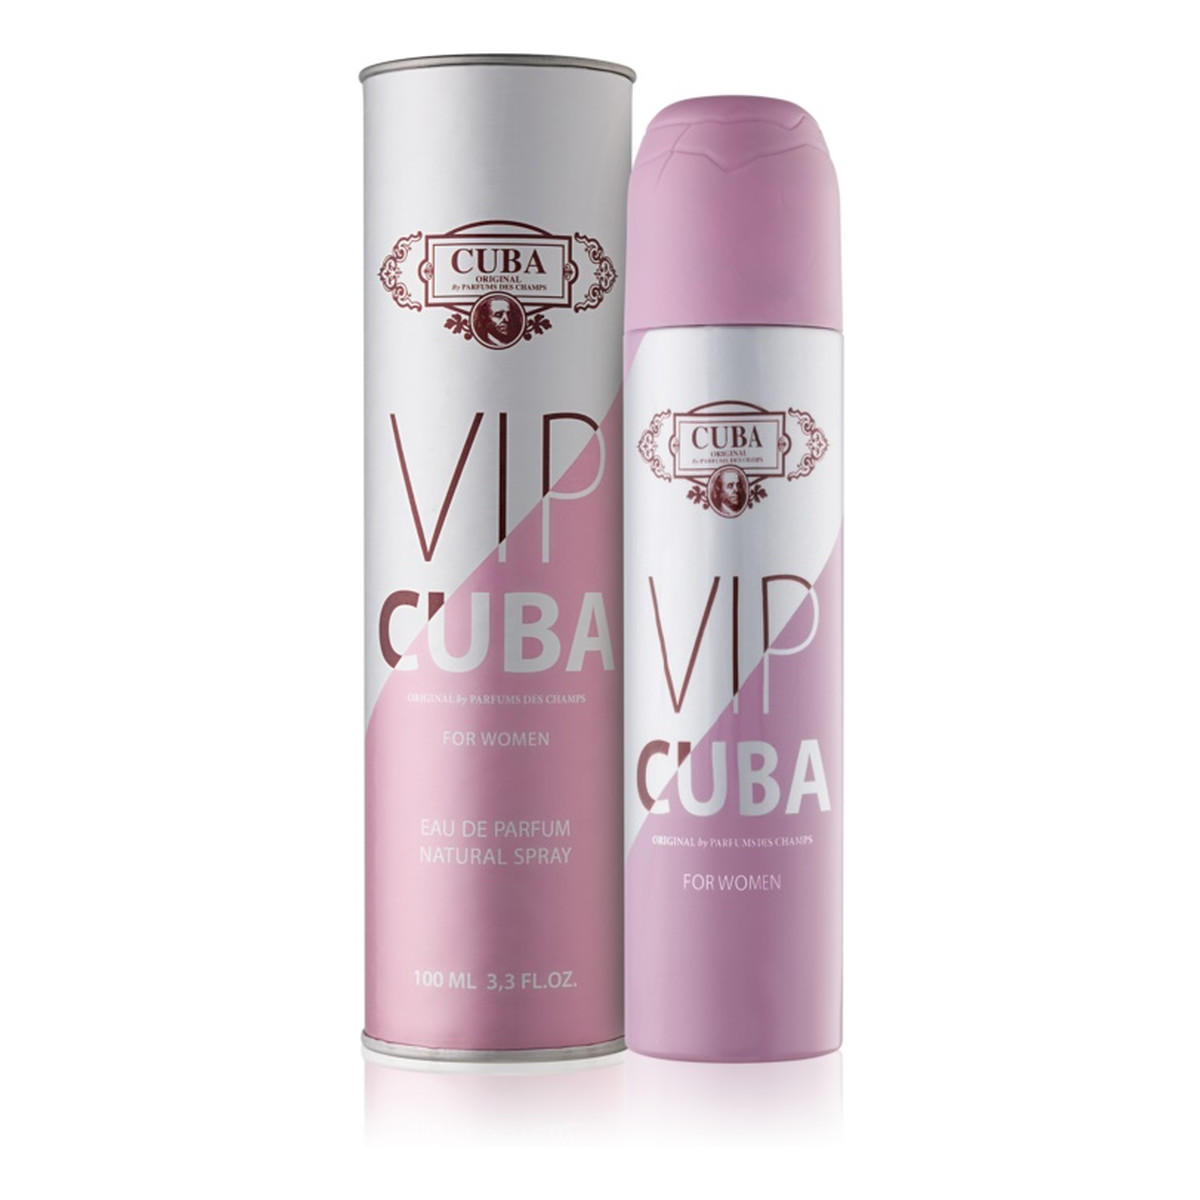 Cuba VIP Woda perfumowana 100ml